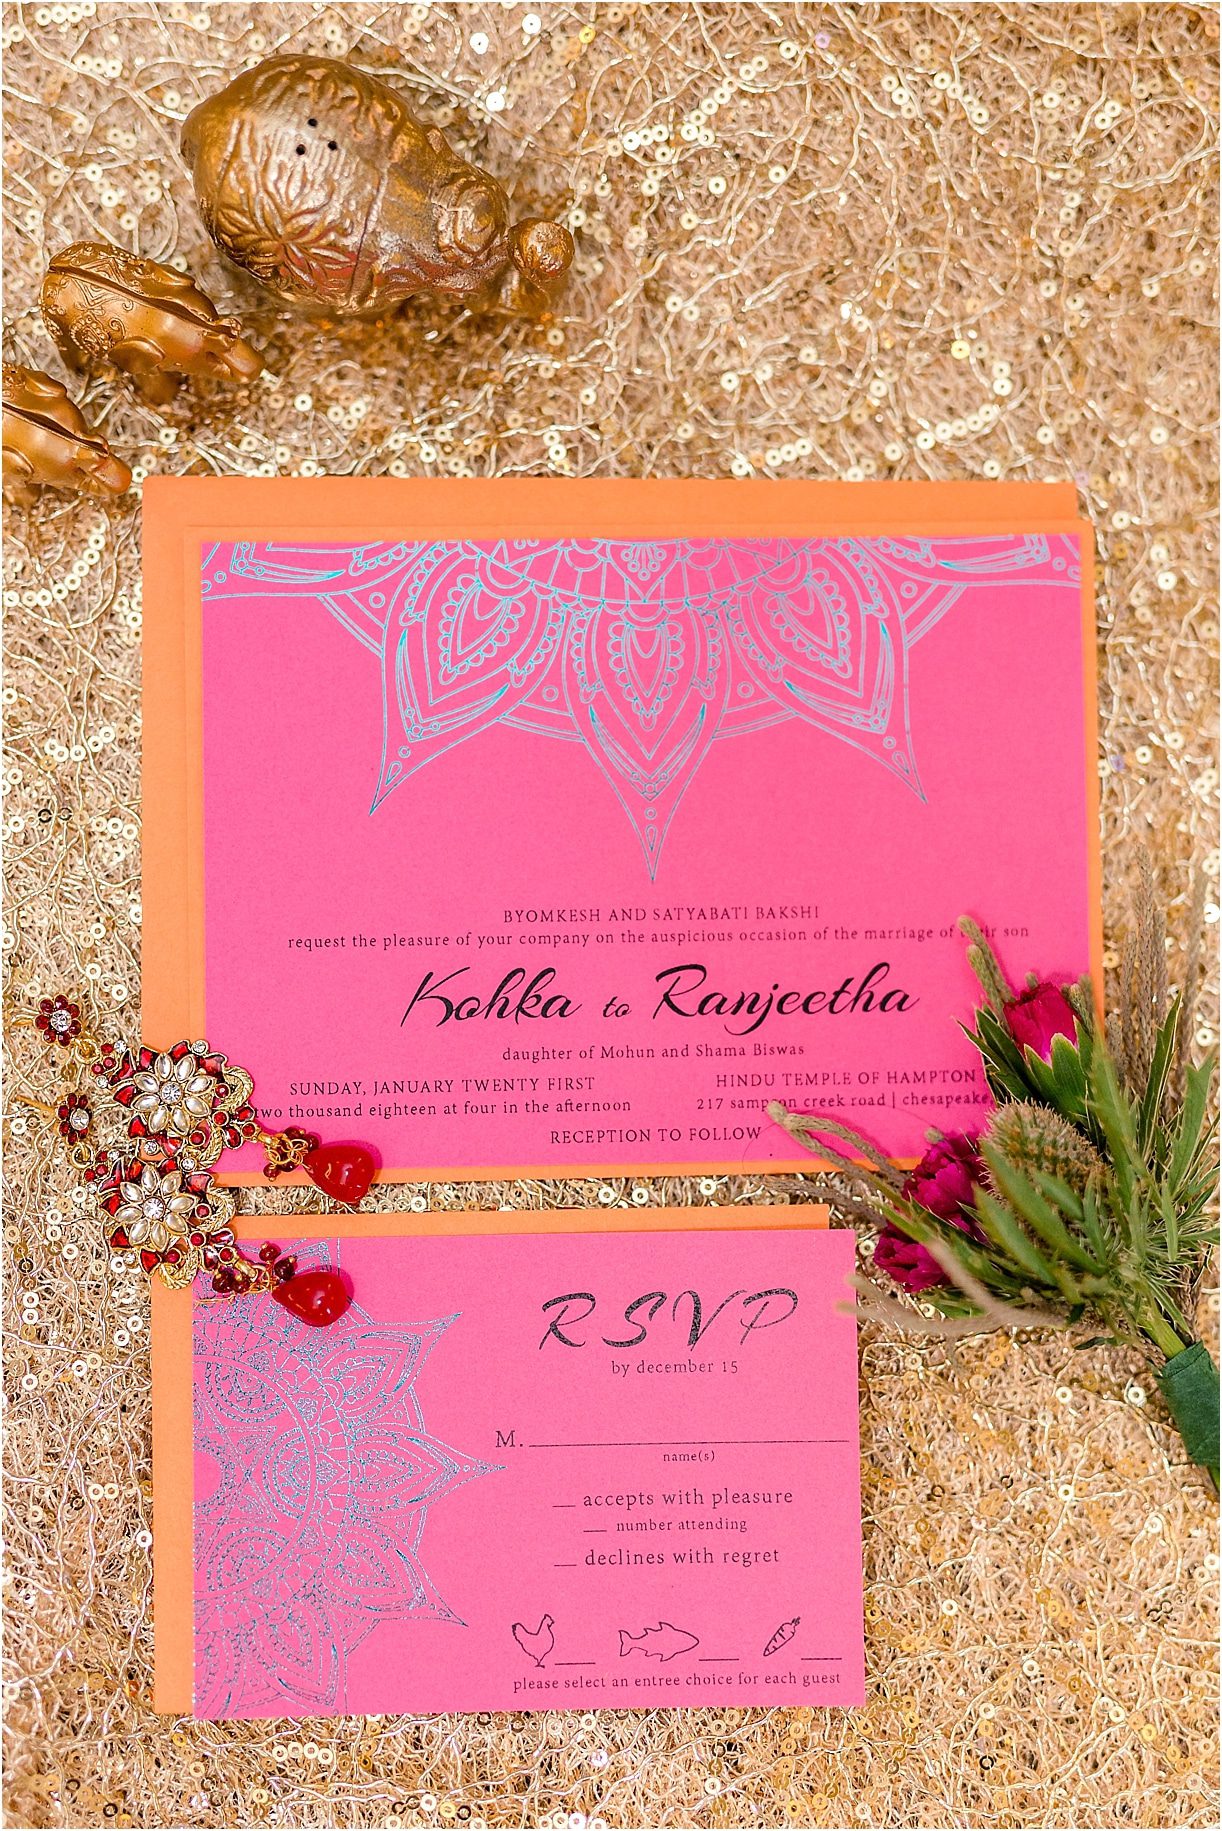 Middle Eastern Wedding | Hill City Bride Virginia Wedding Blog Travel Destination - invitations, stationery